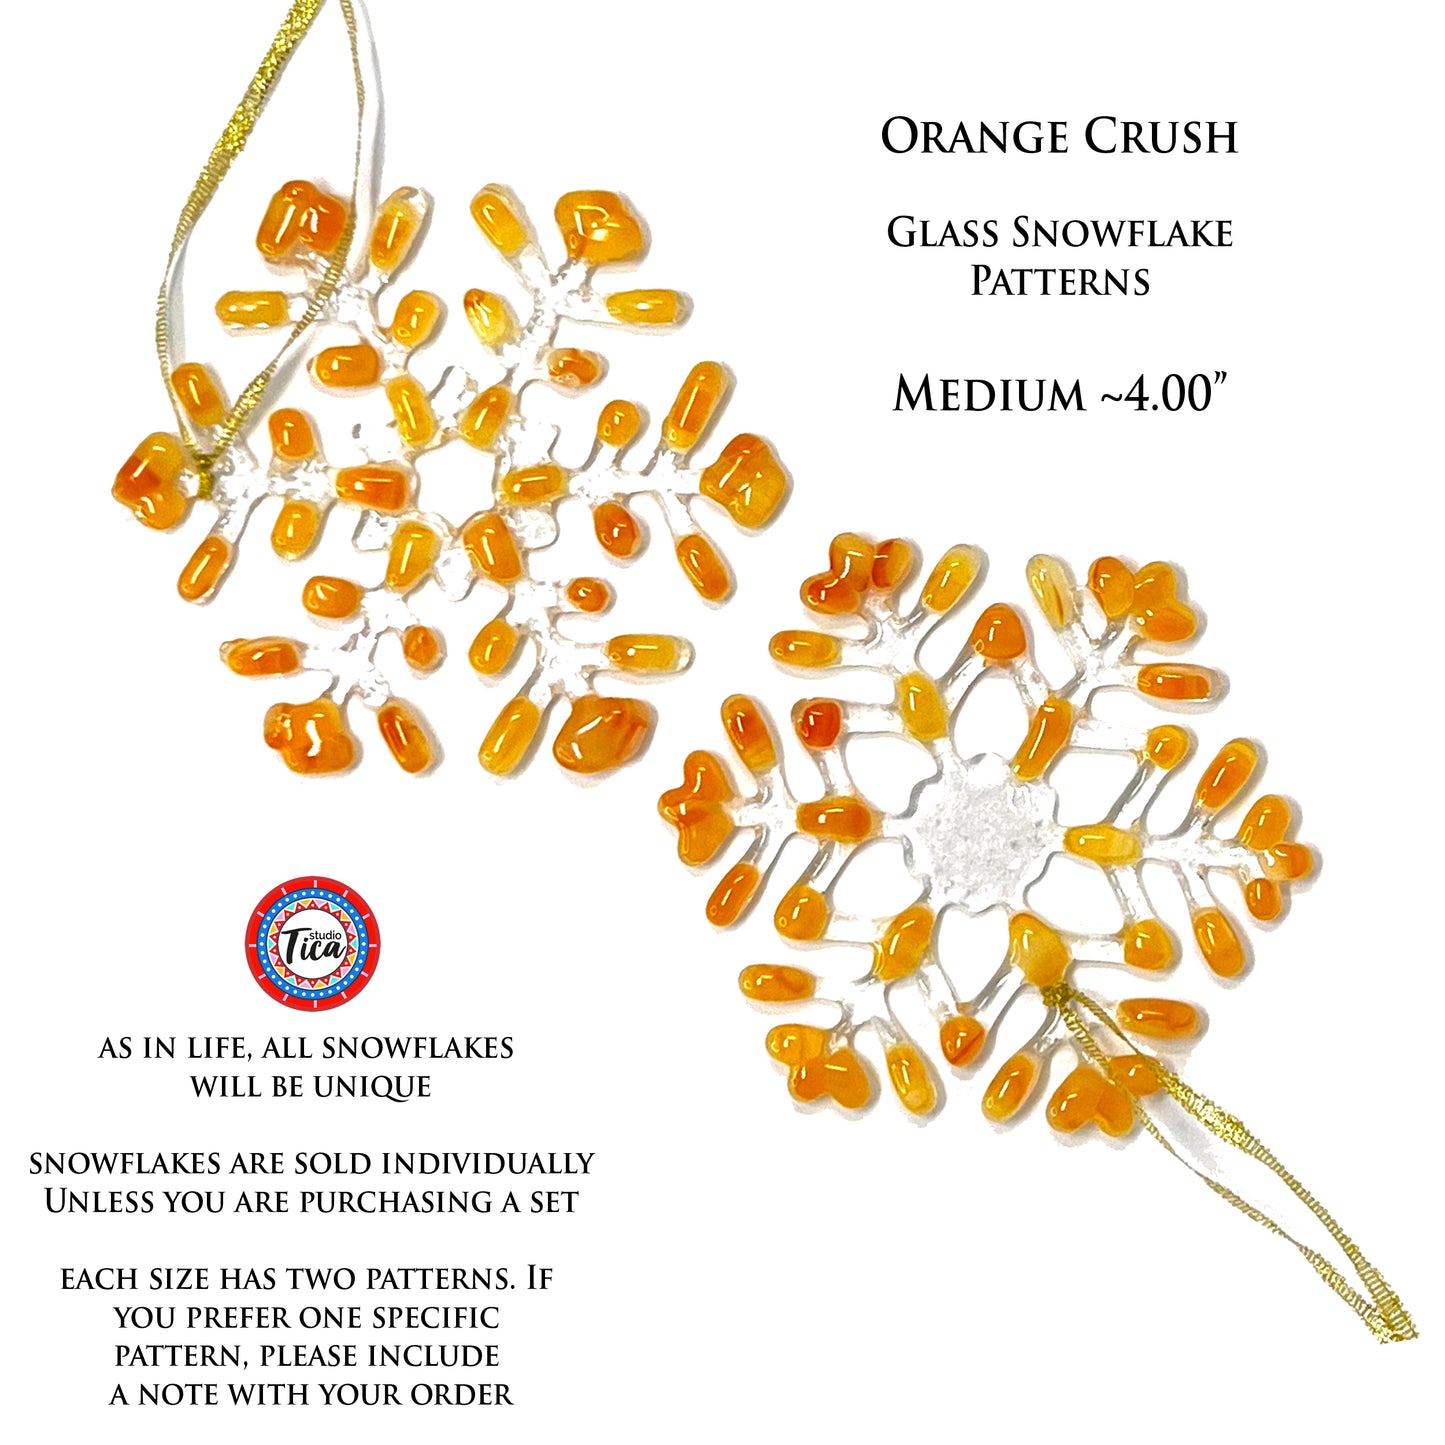 studioTica Orange Crush - Handmade Glass Snowflakes